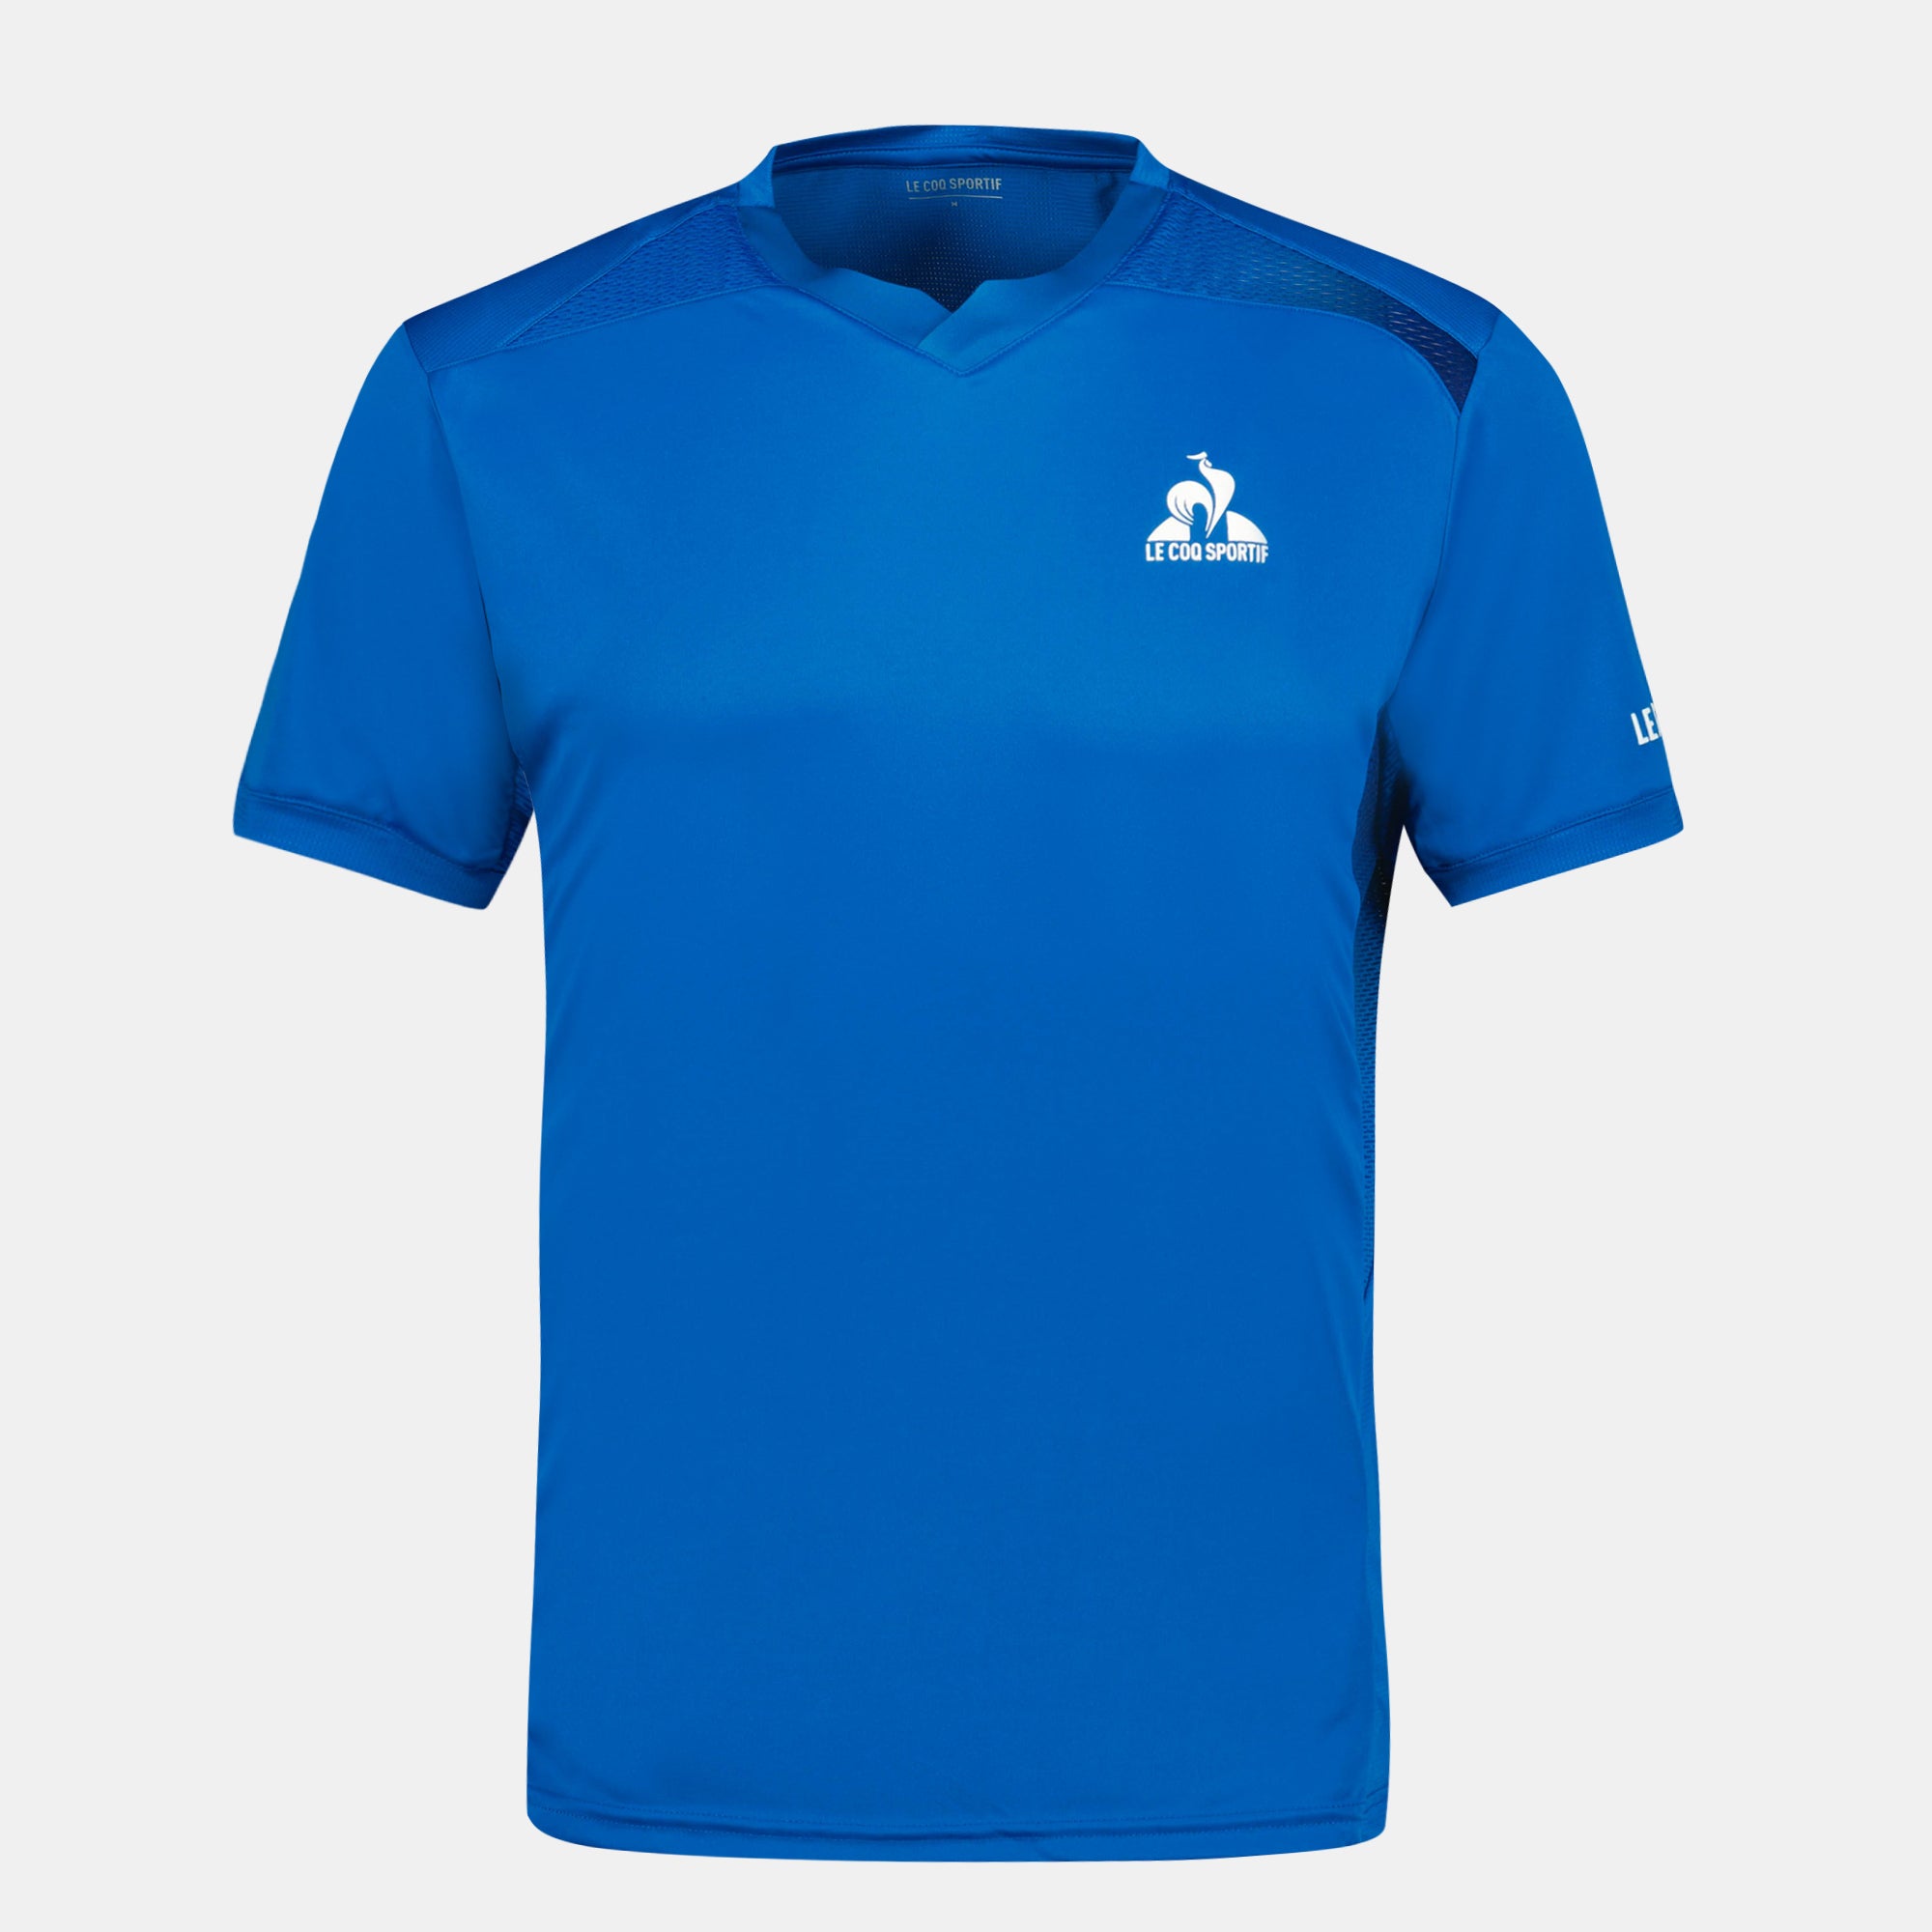 2410518-TENNIS PRO Tee SS 24 N°1 M lapis blue  | T-Shirt for men